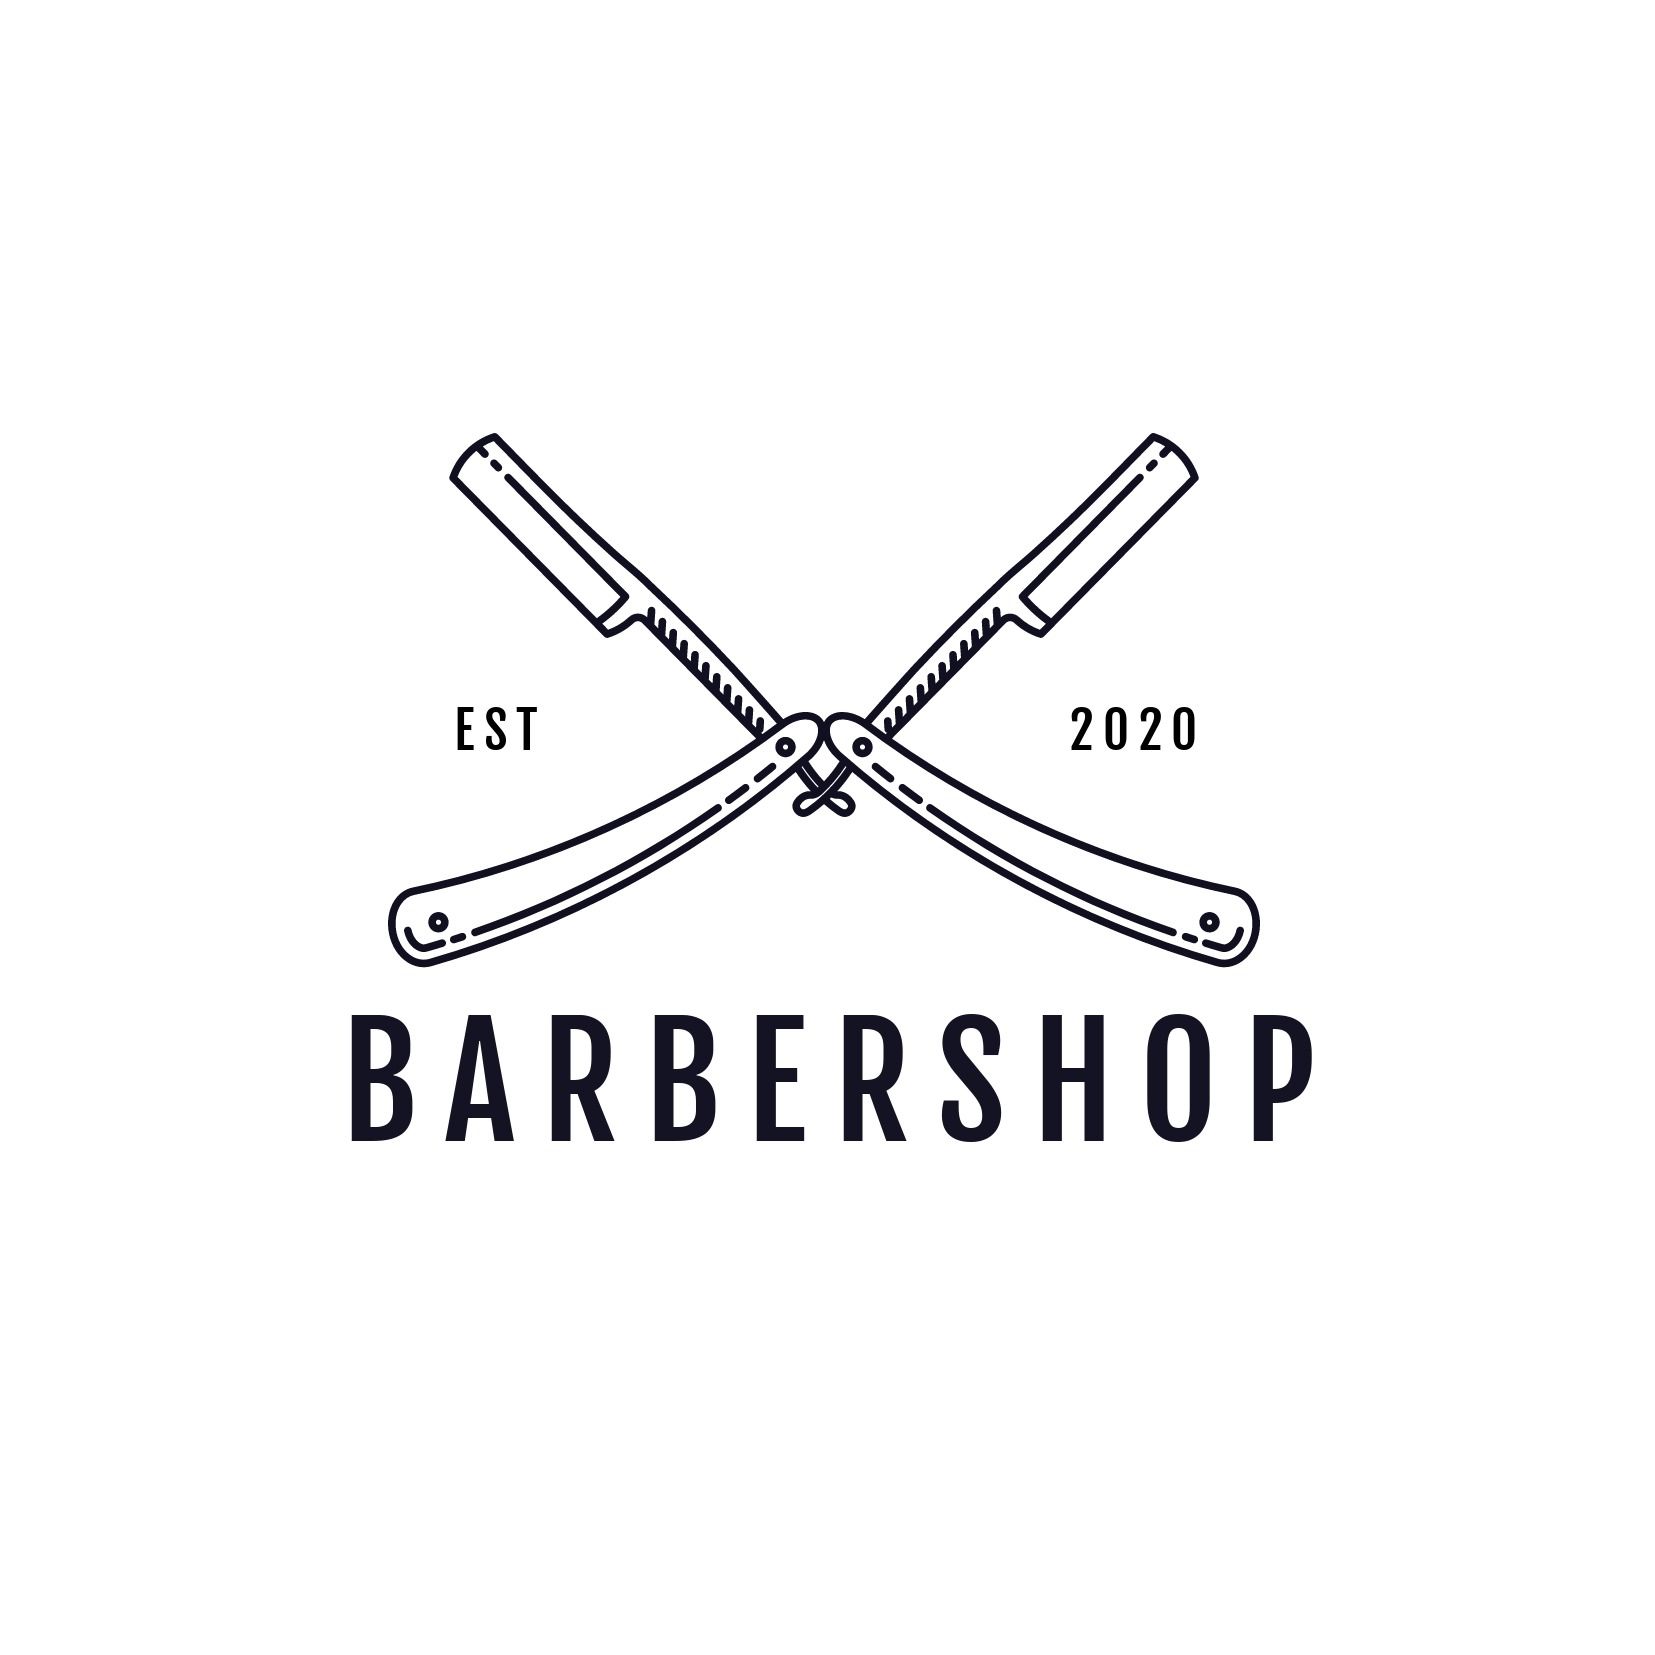 Barber Shop Creative Logo Designs - A step-by-step guide to creative logo design - Image